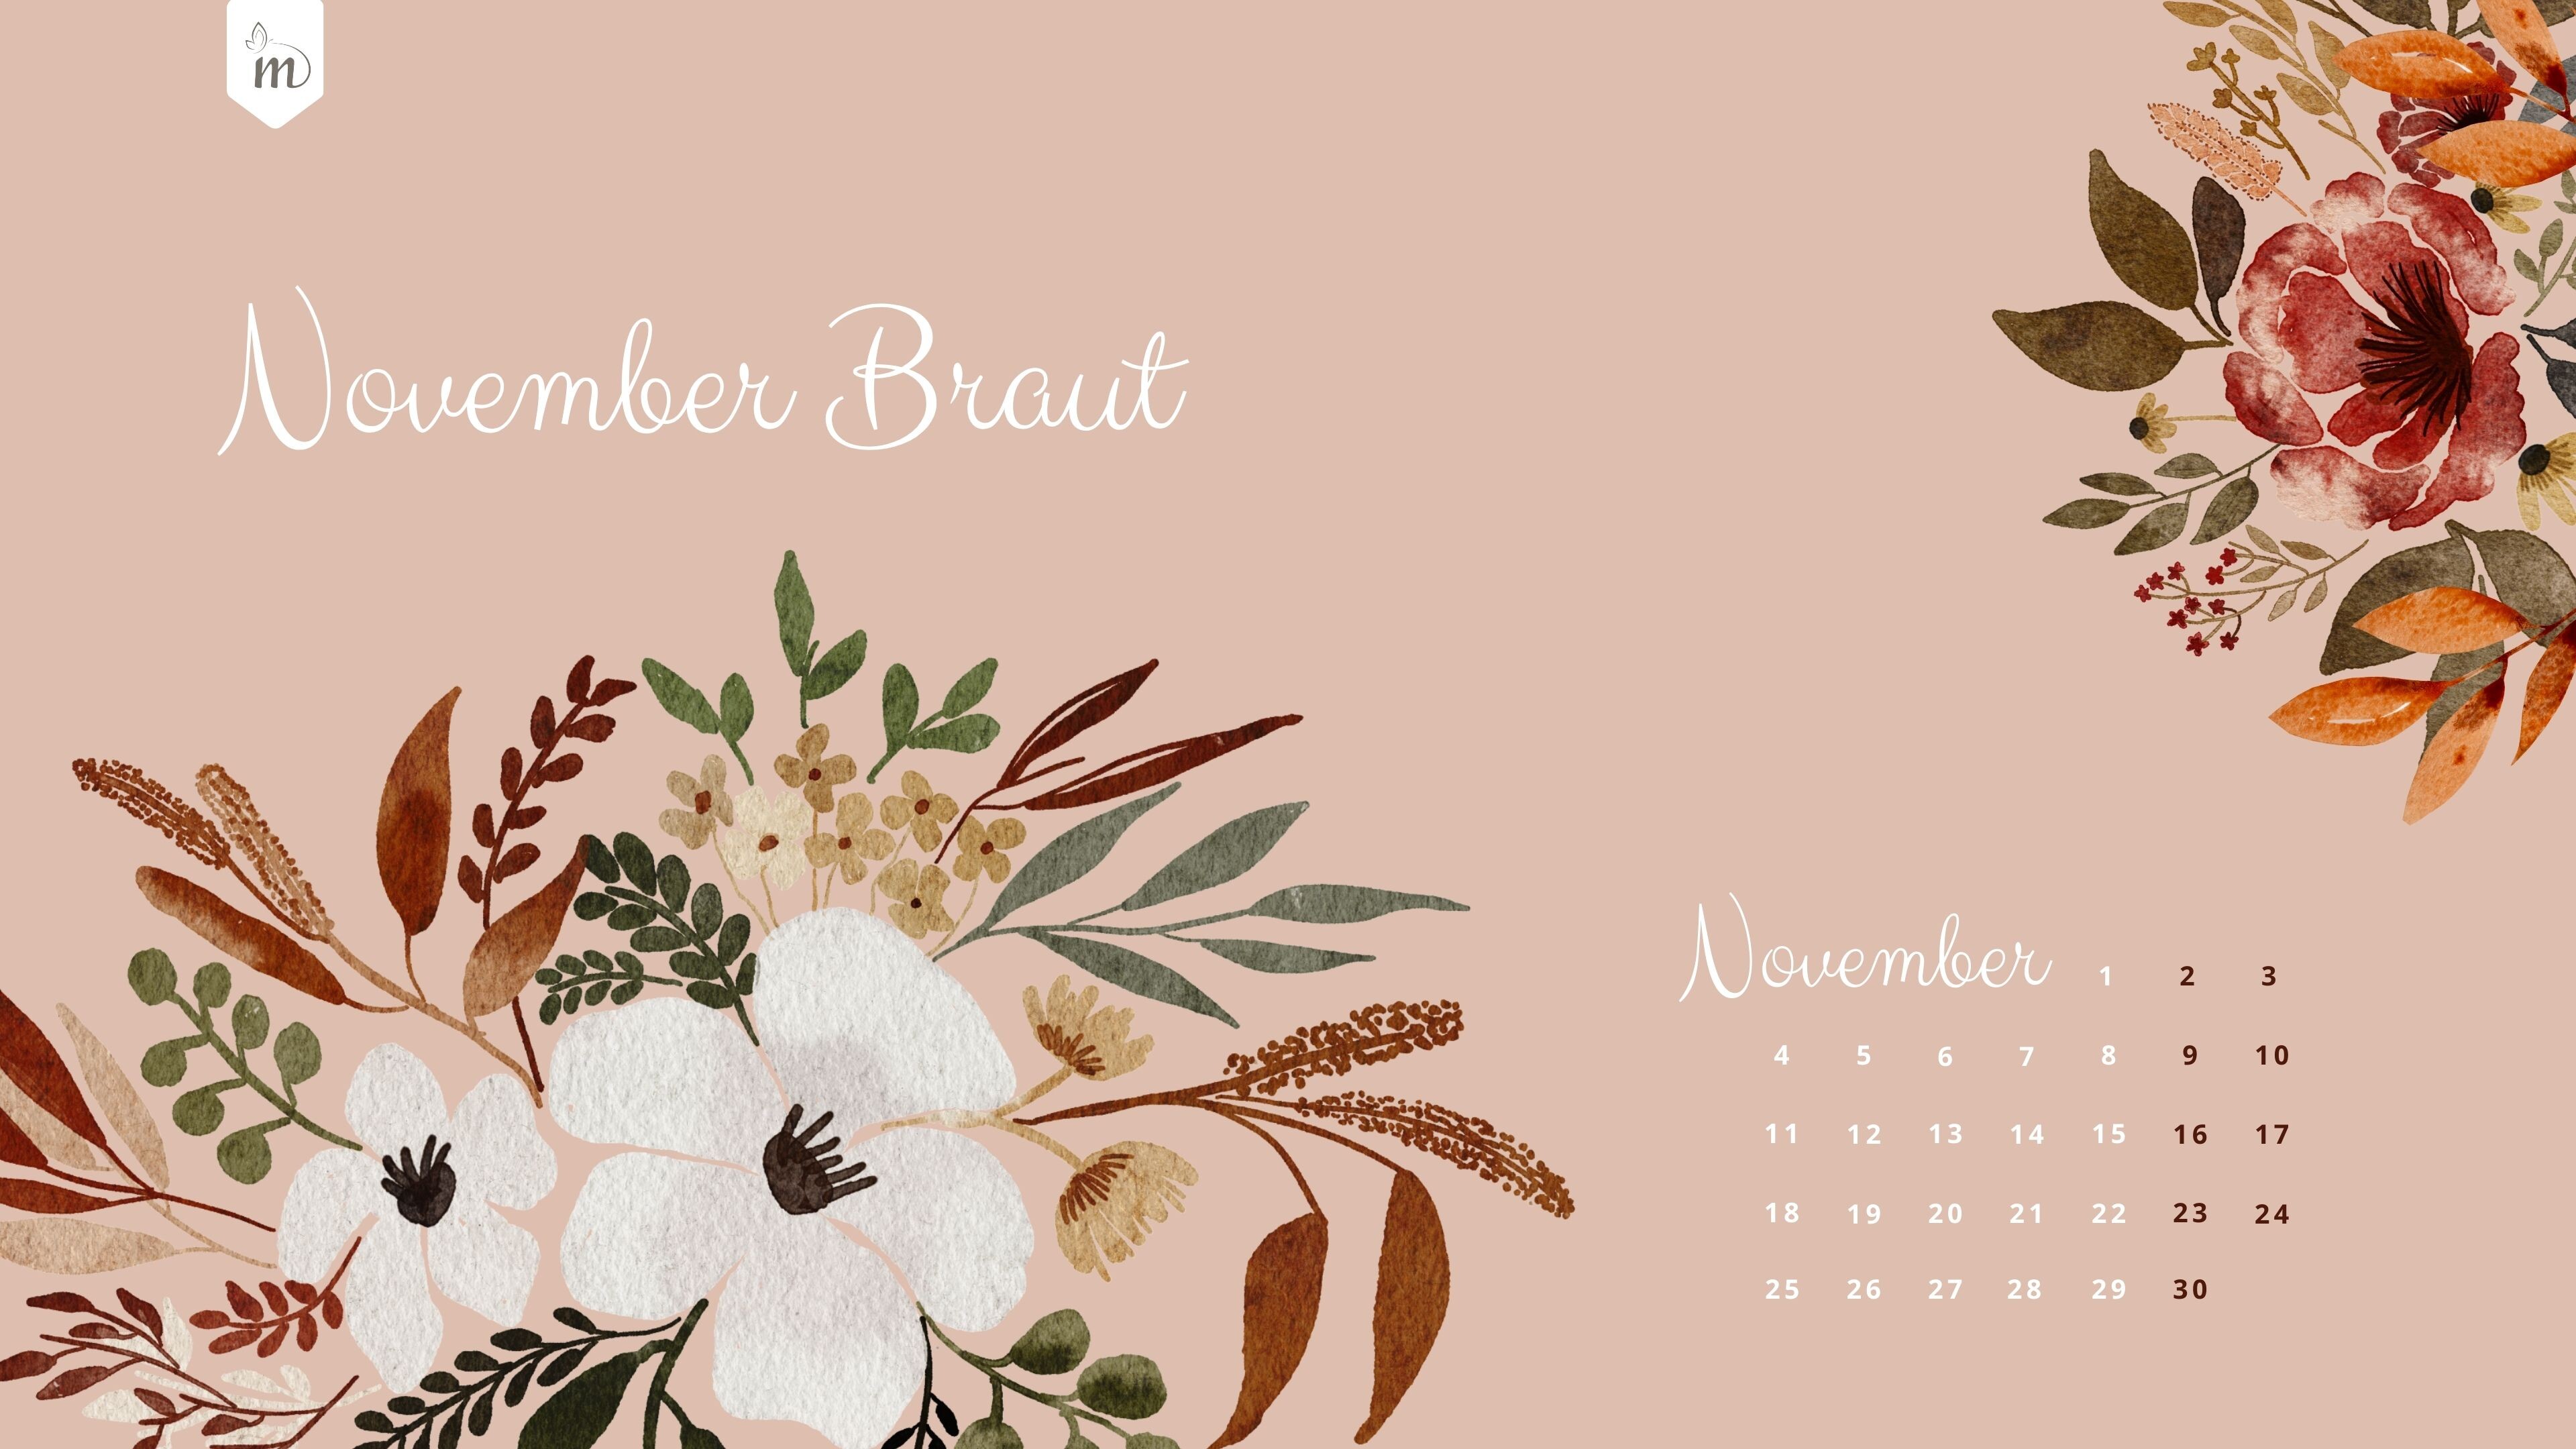 November Braut Wallpaper